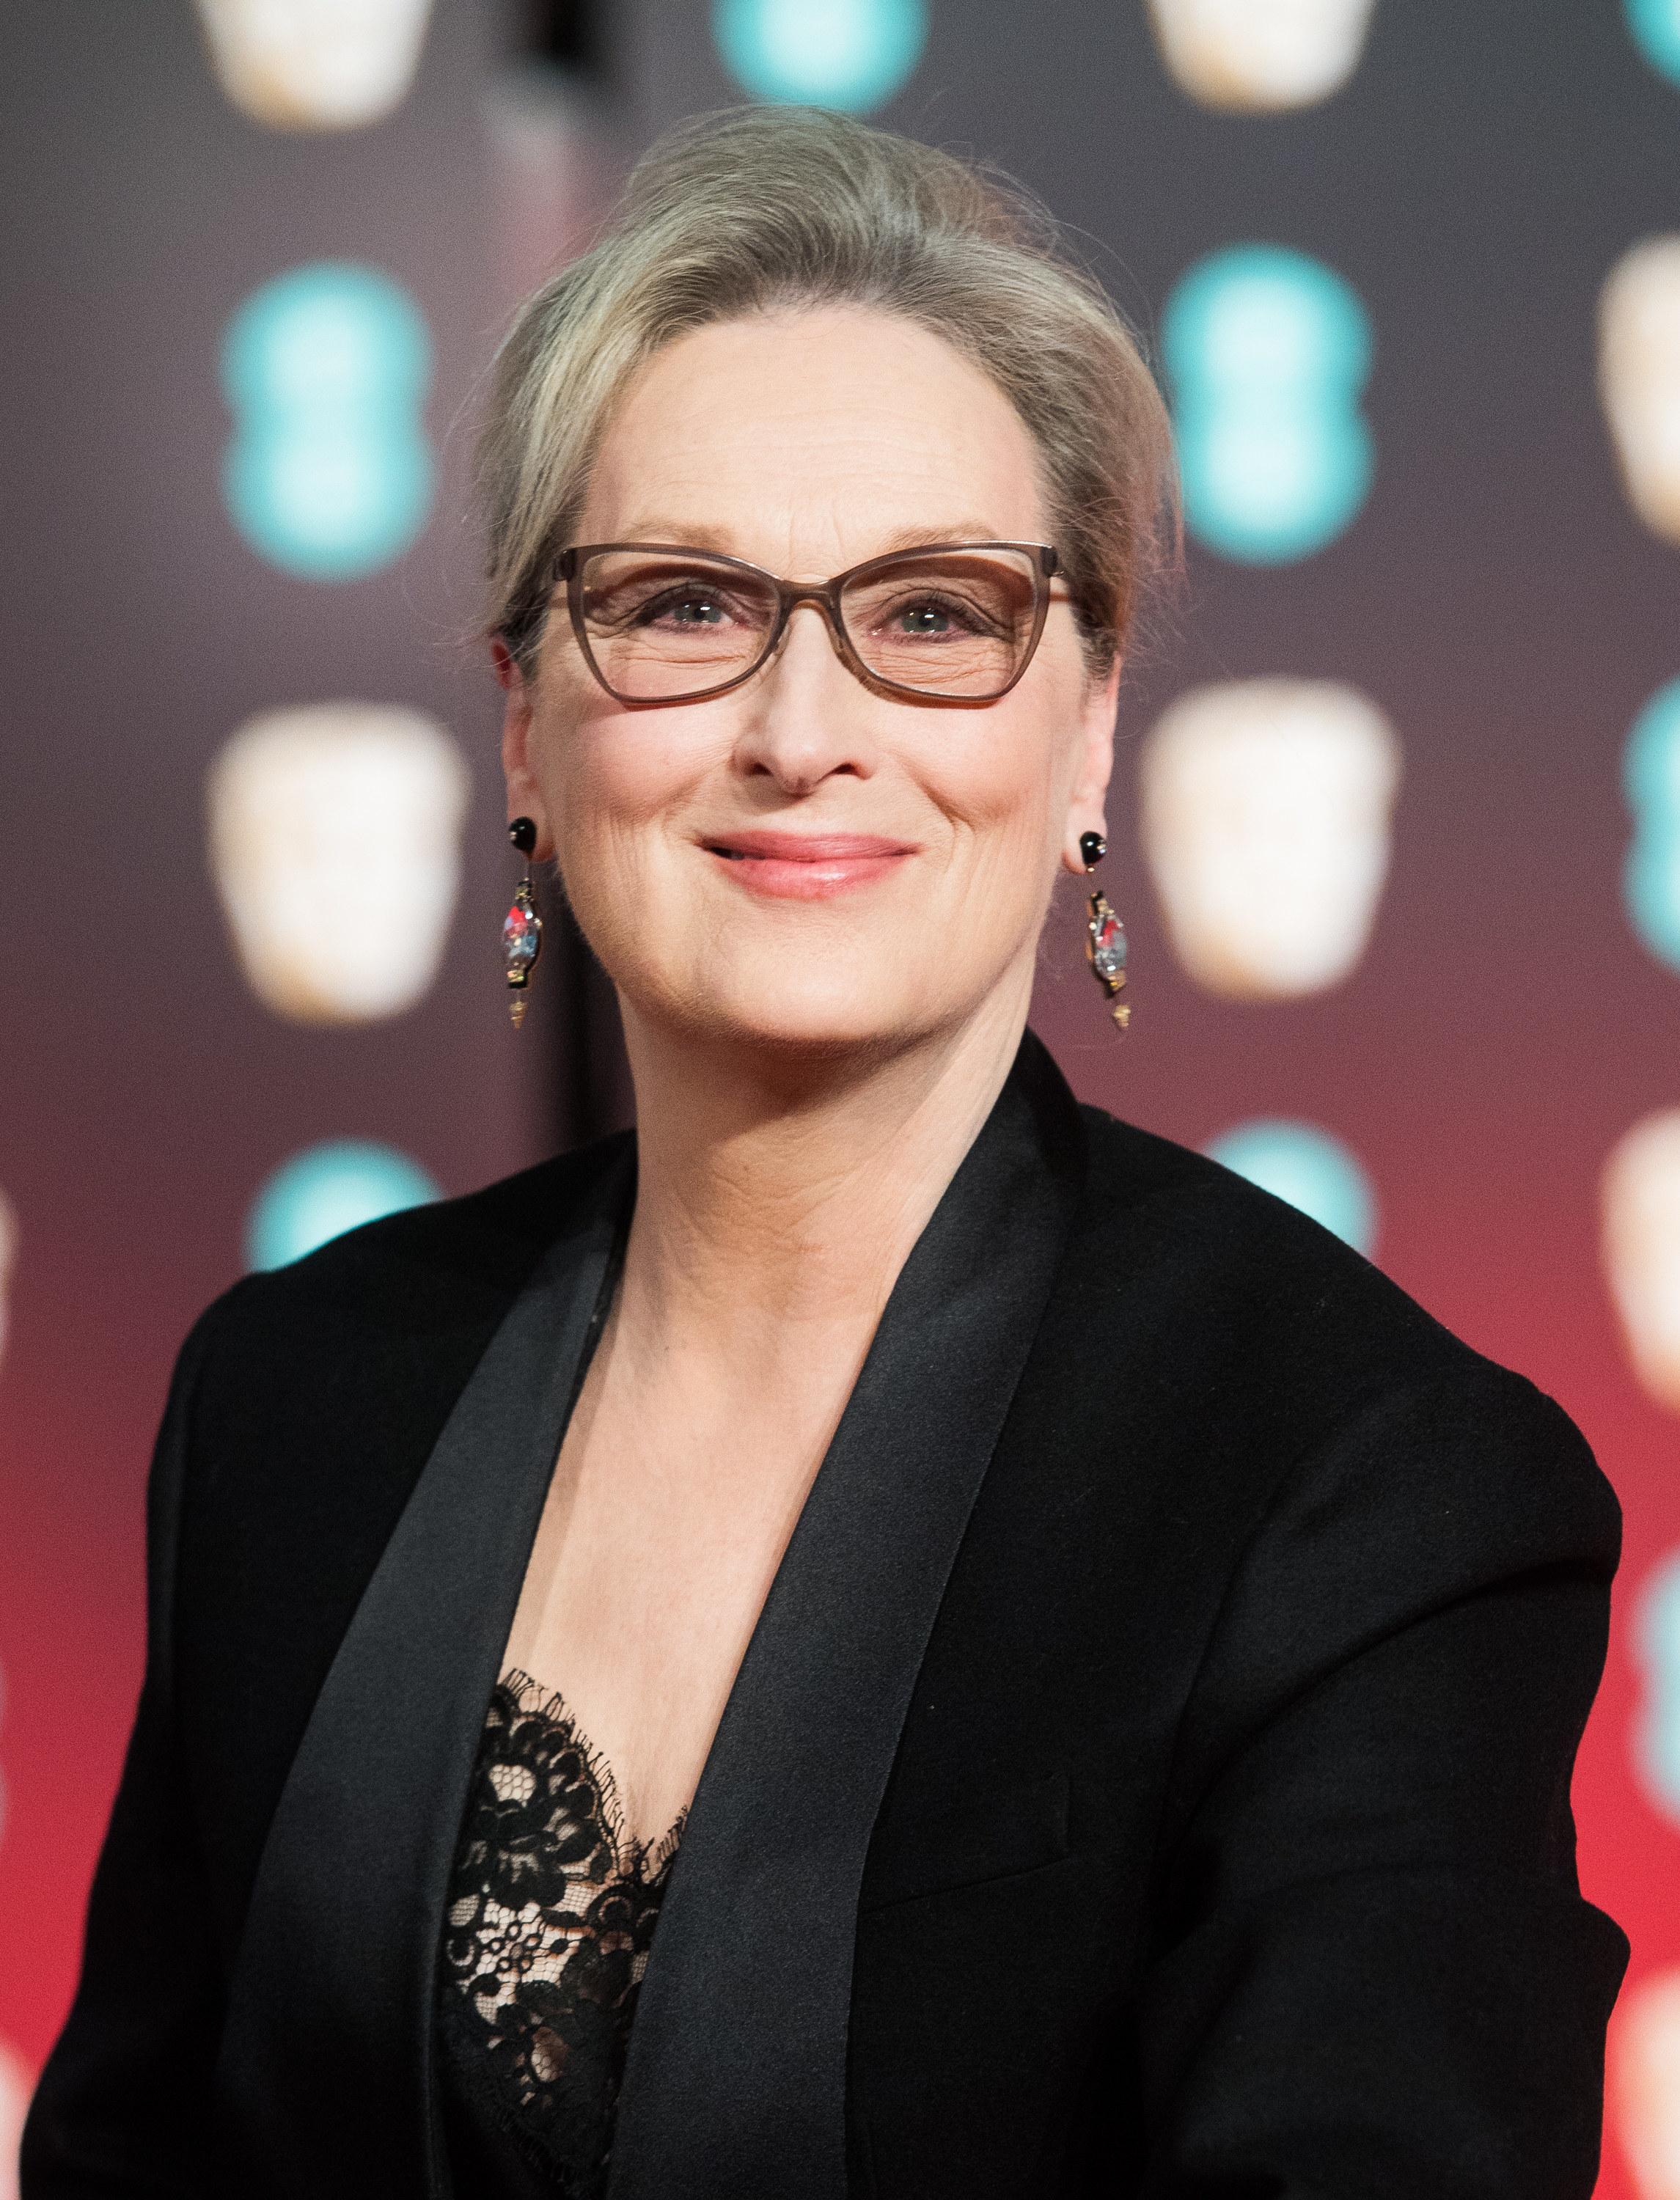 Meryl Streep smiles